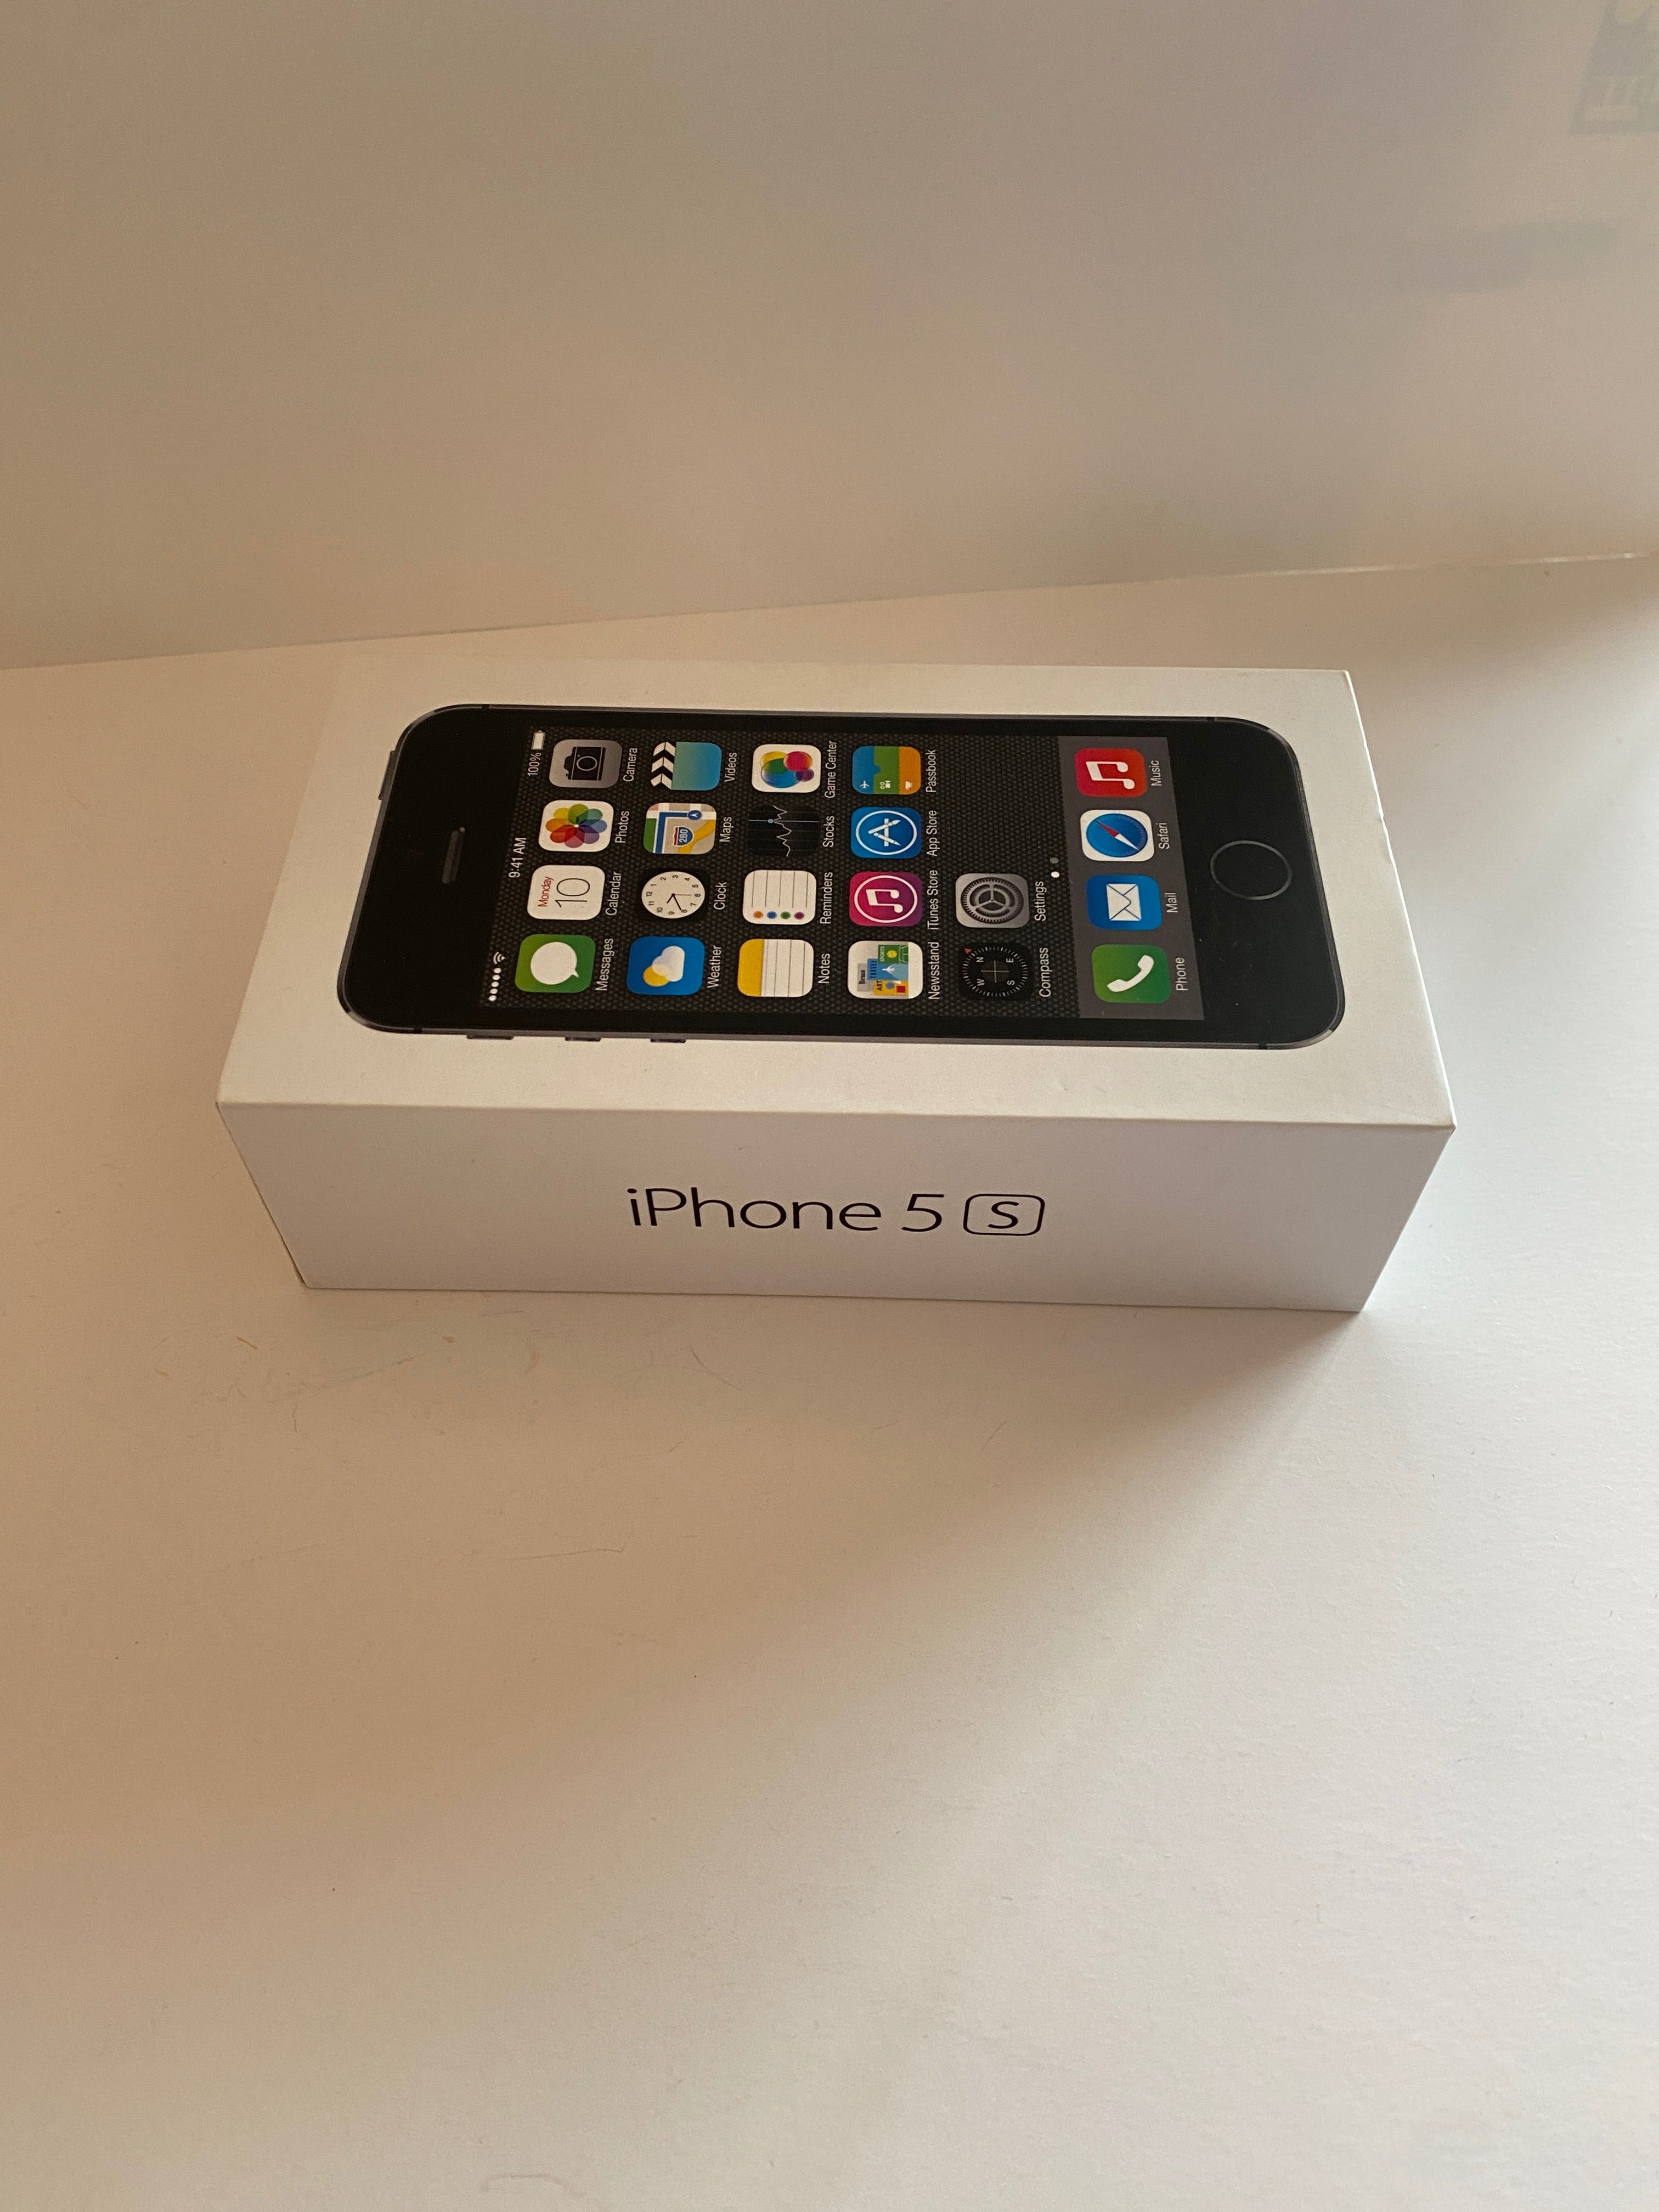 [Apple] Caixa iPhone 5s 16GB Space Gray